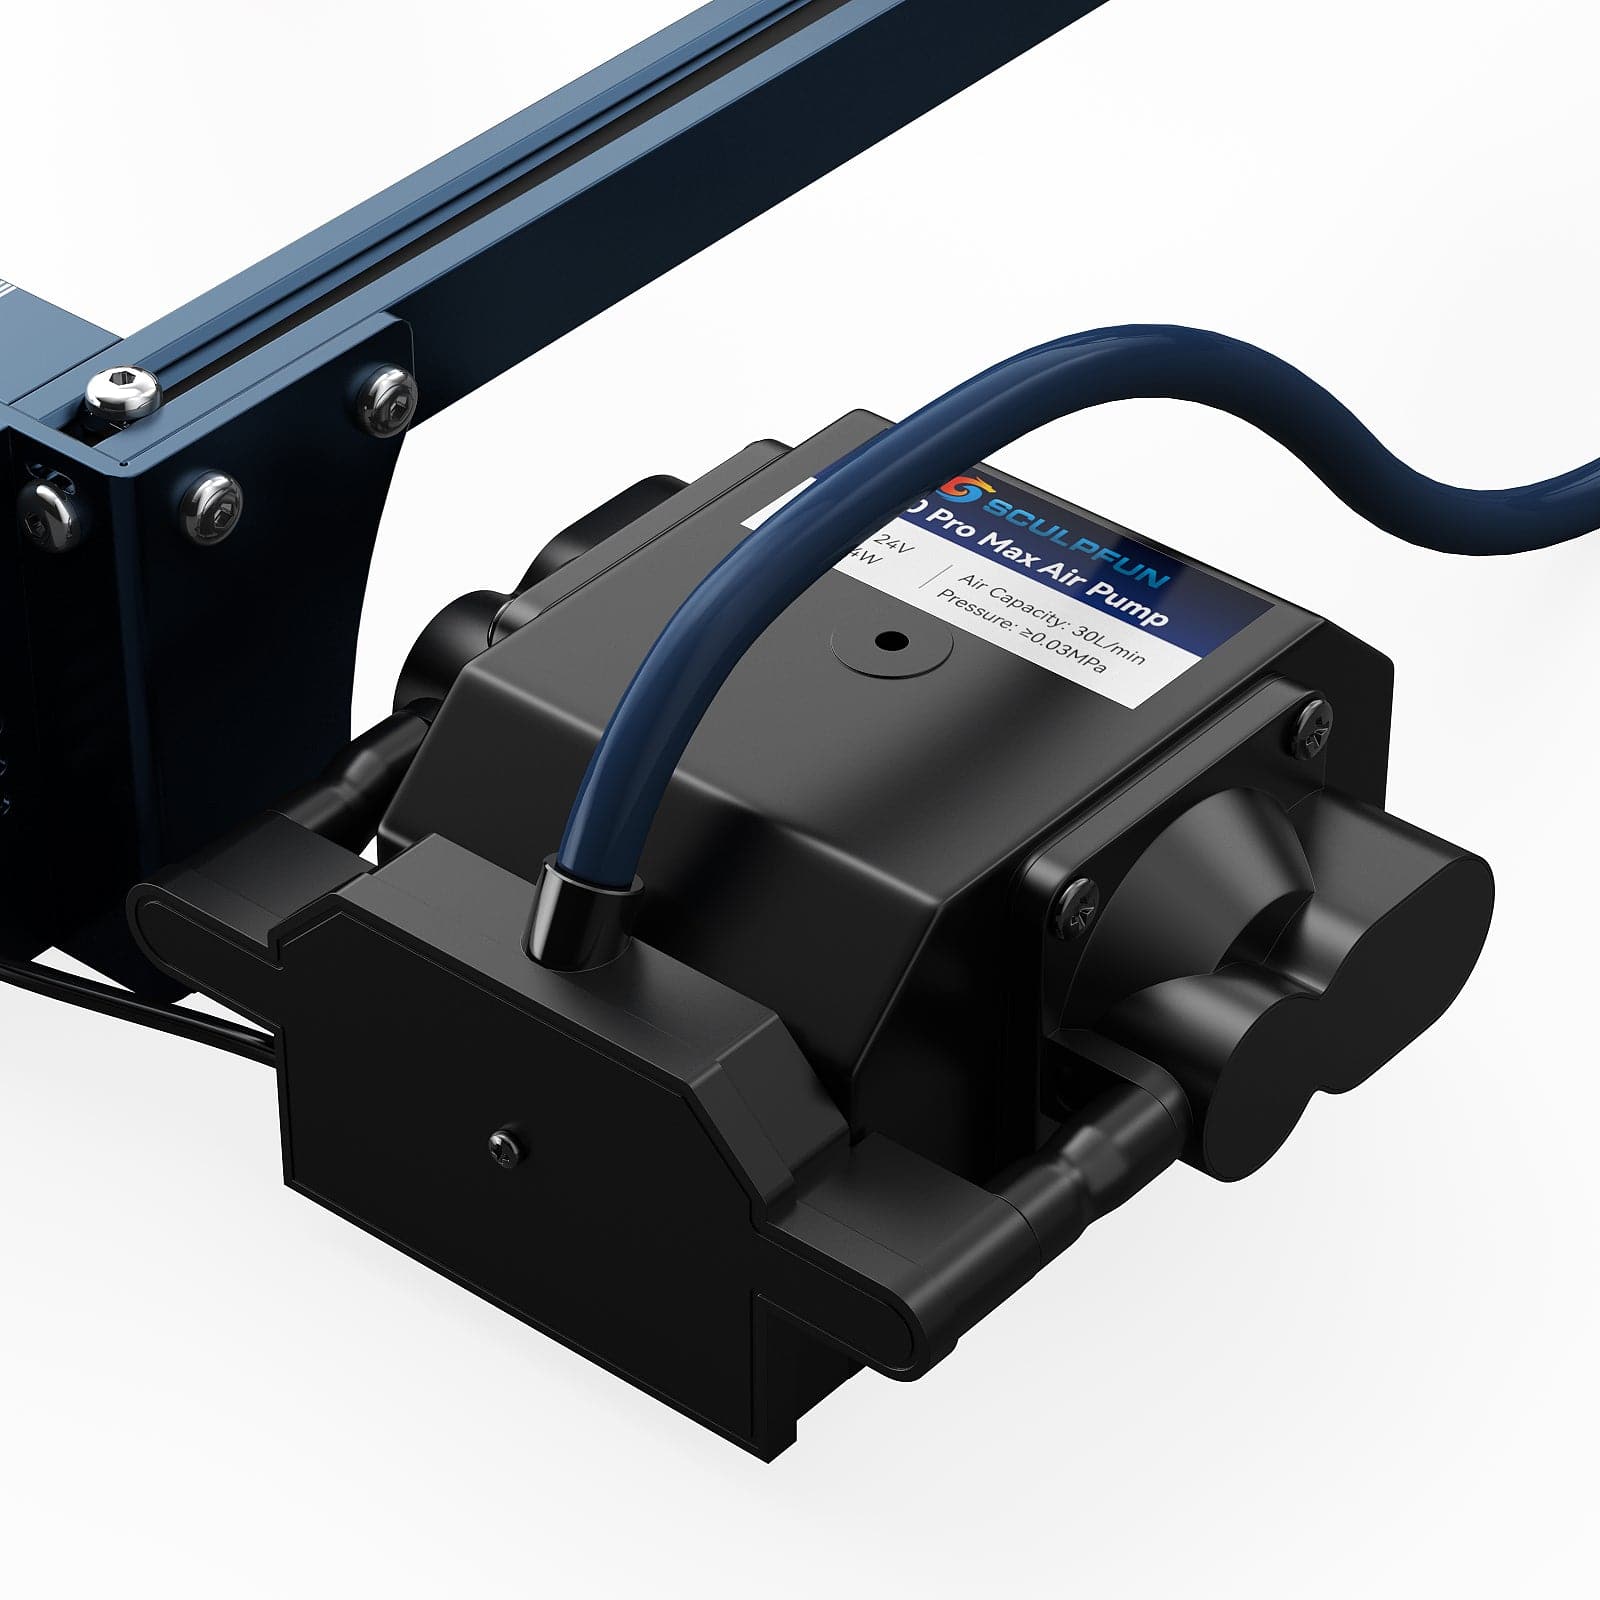 SCULPFUN S30 Pro Max  Laser Engraver Machine